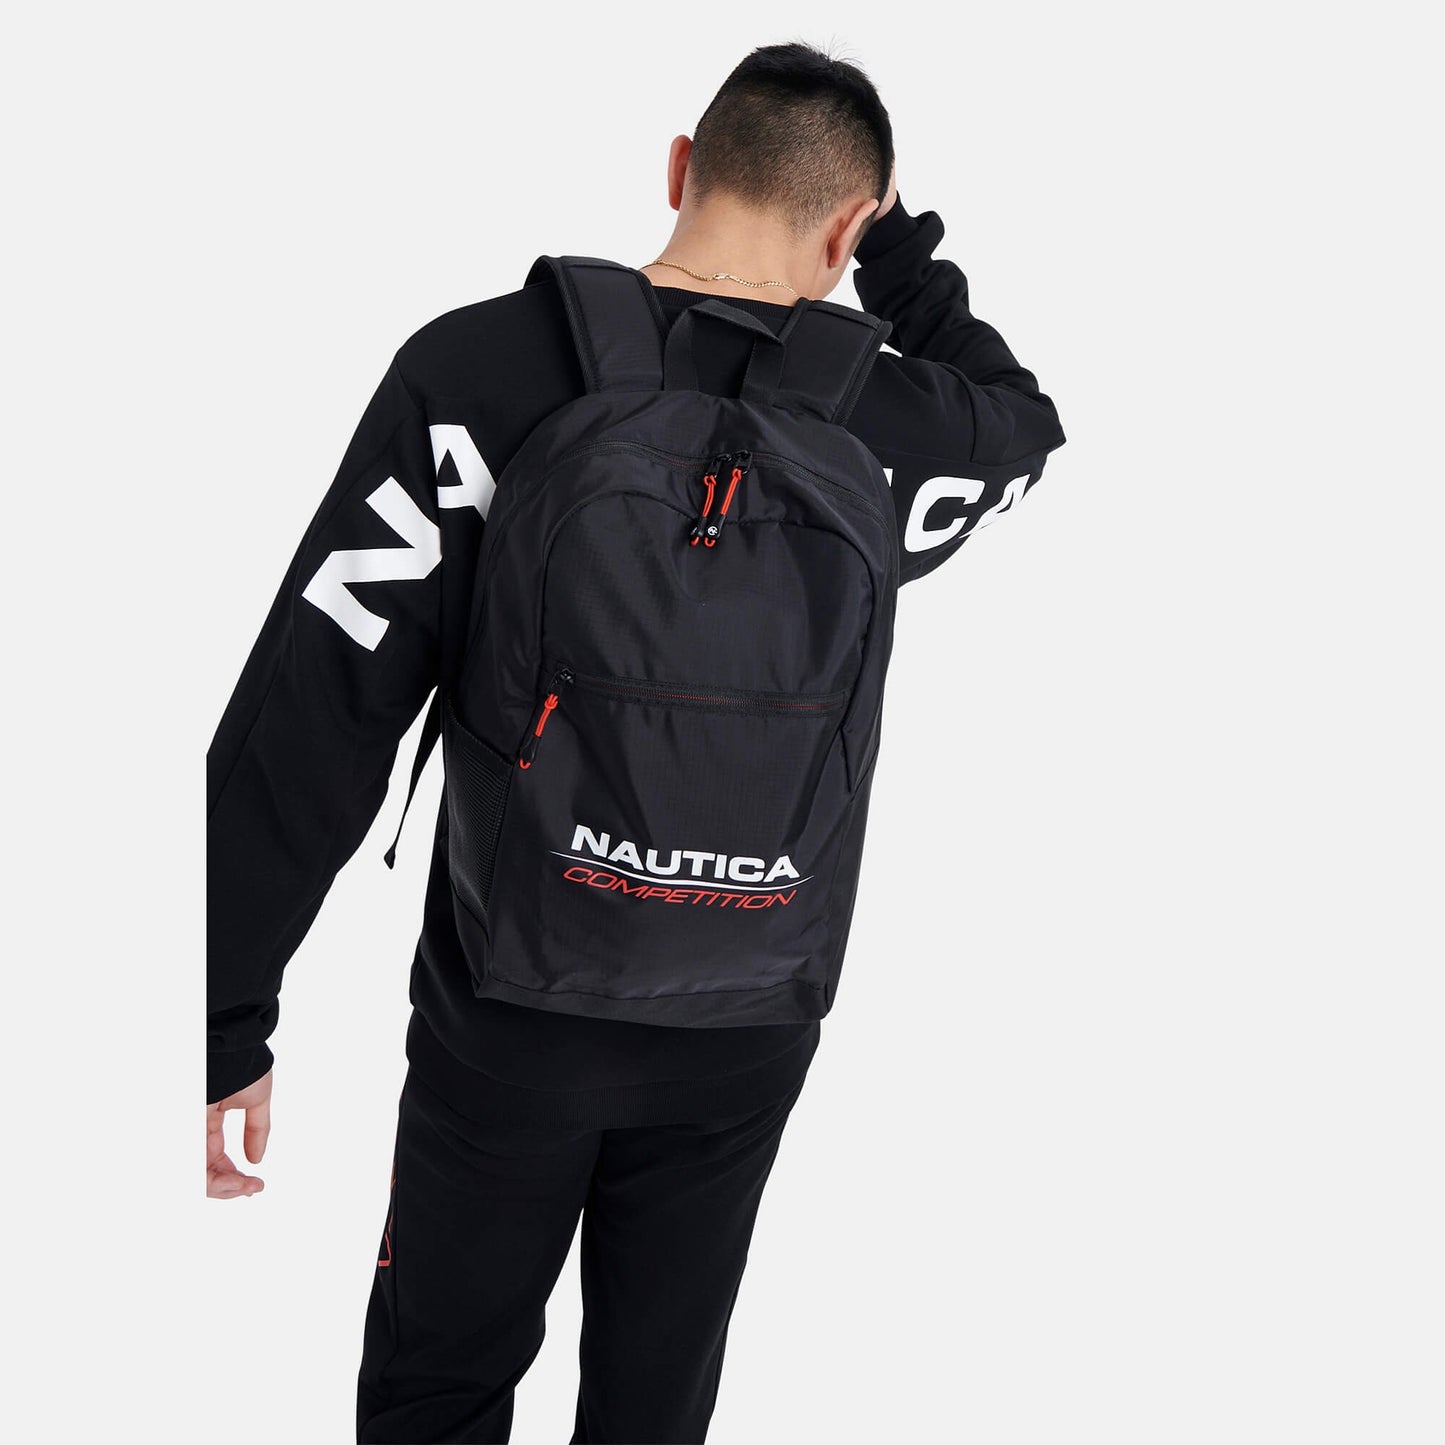 Nautica Davit Backpack Black